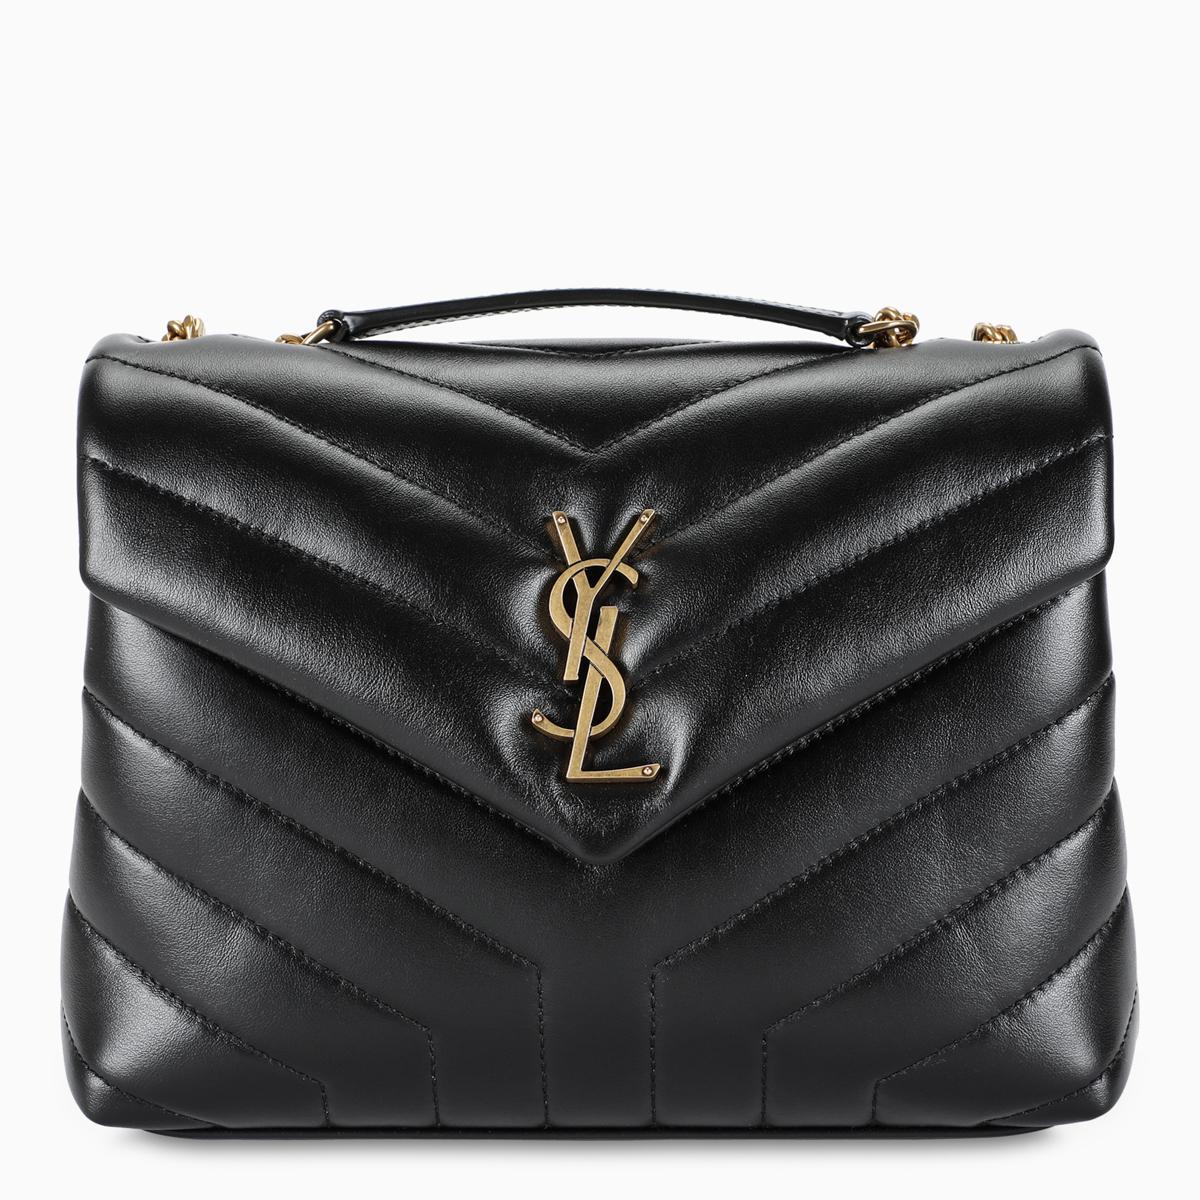 Saint Laurent Black/gold Small Ysl Loulou Bag | Lyst